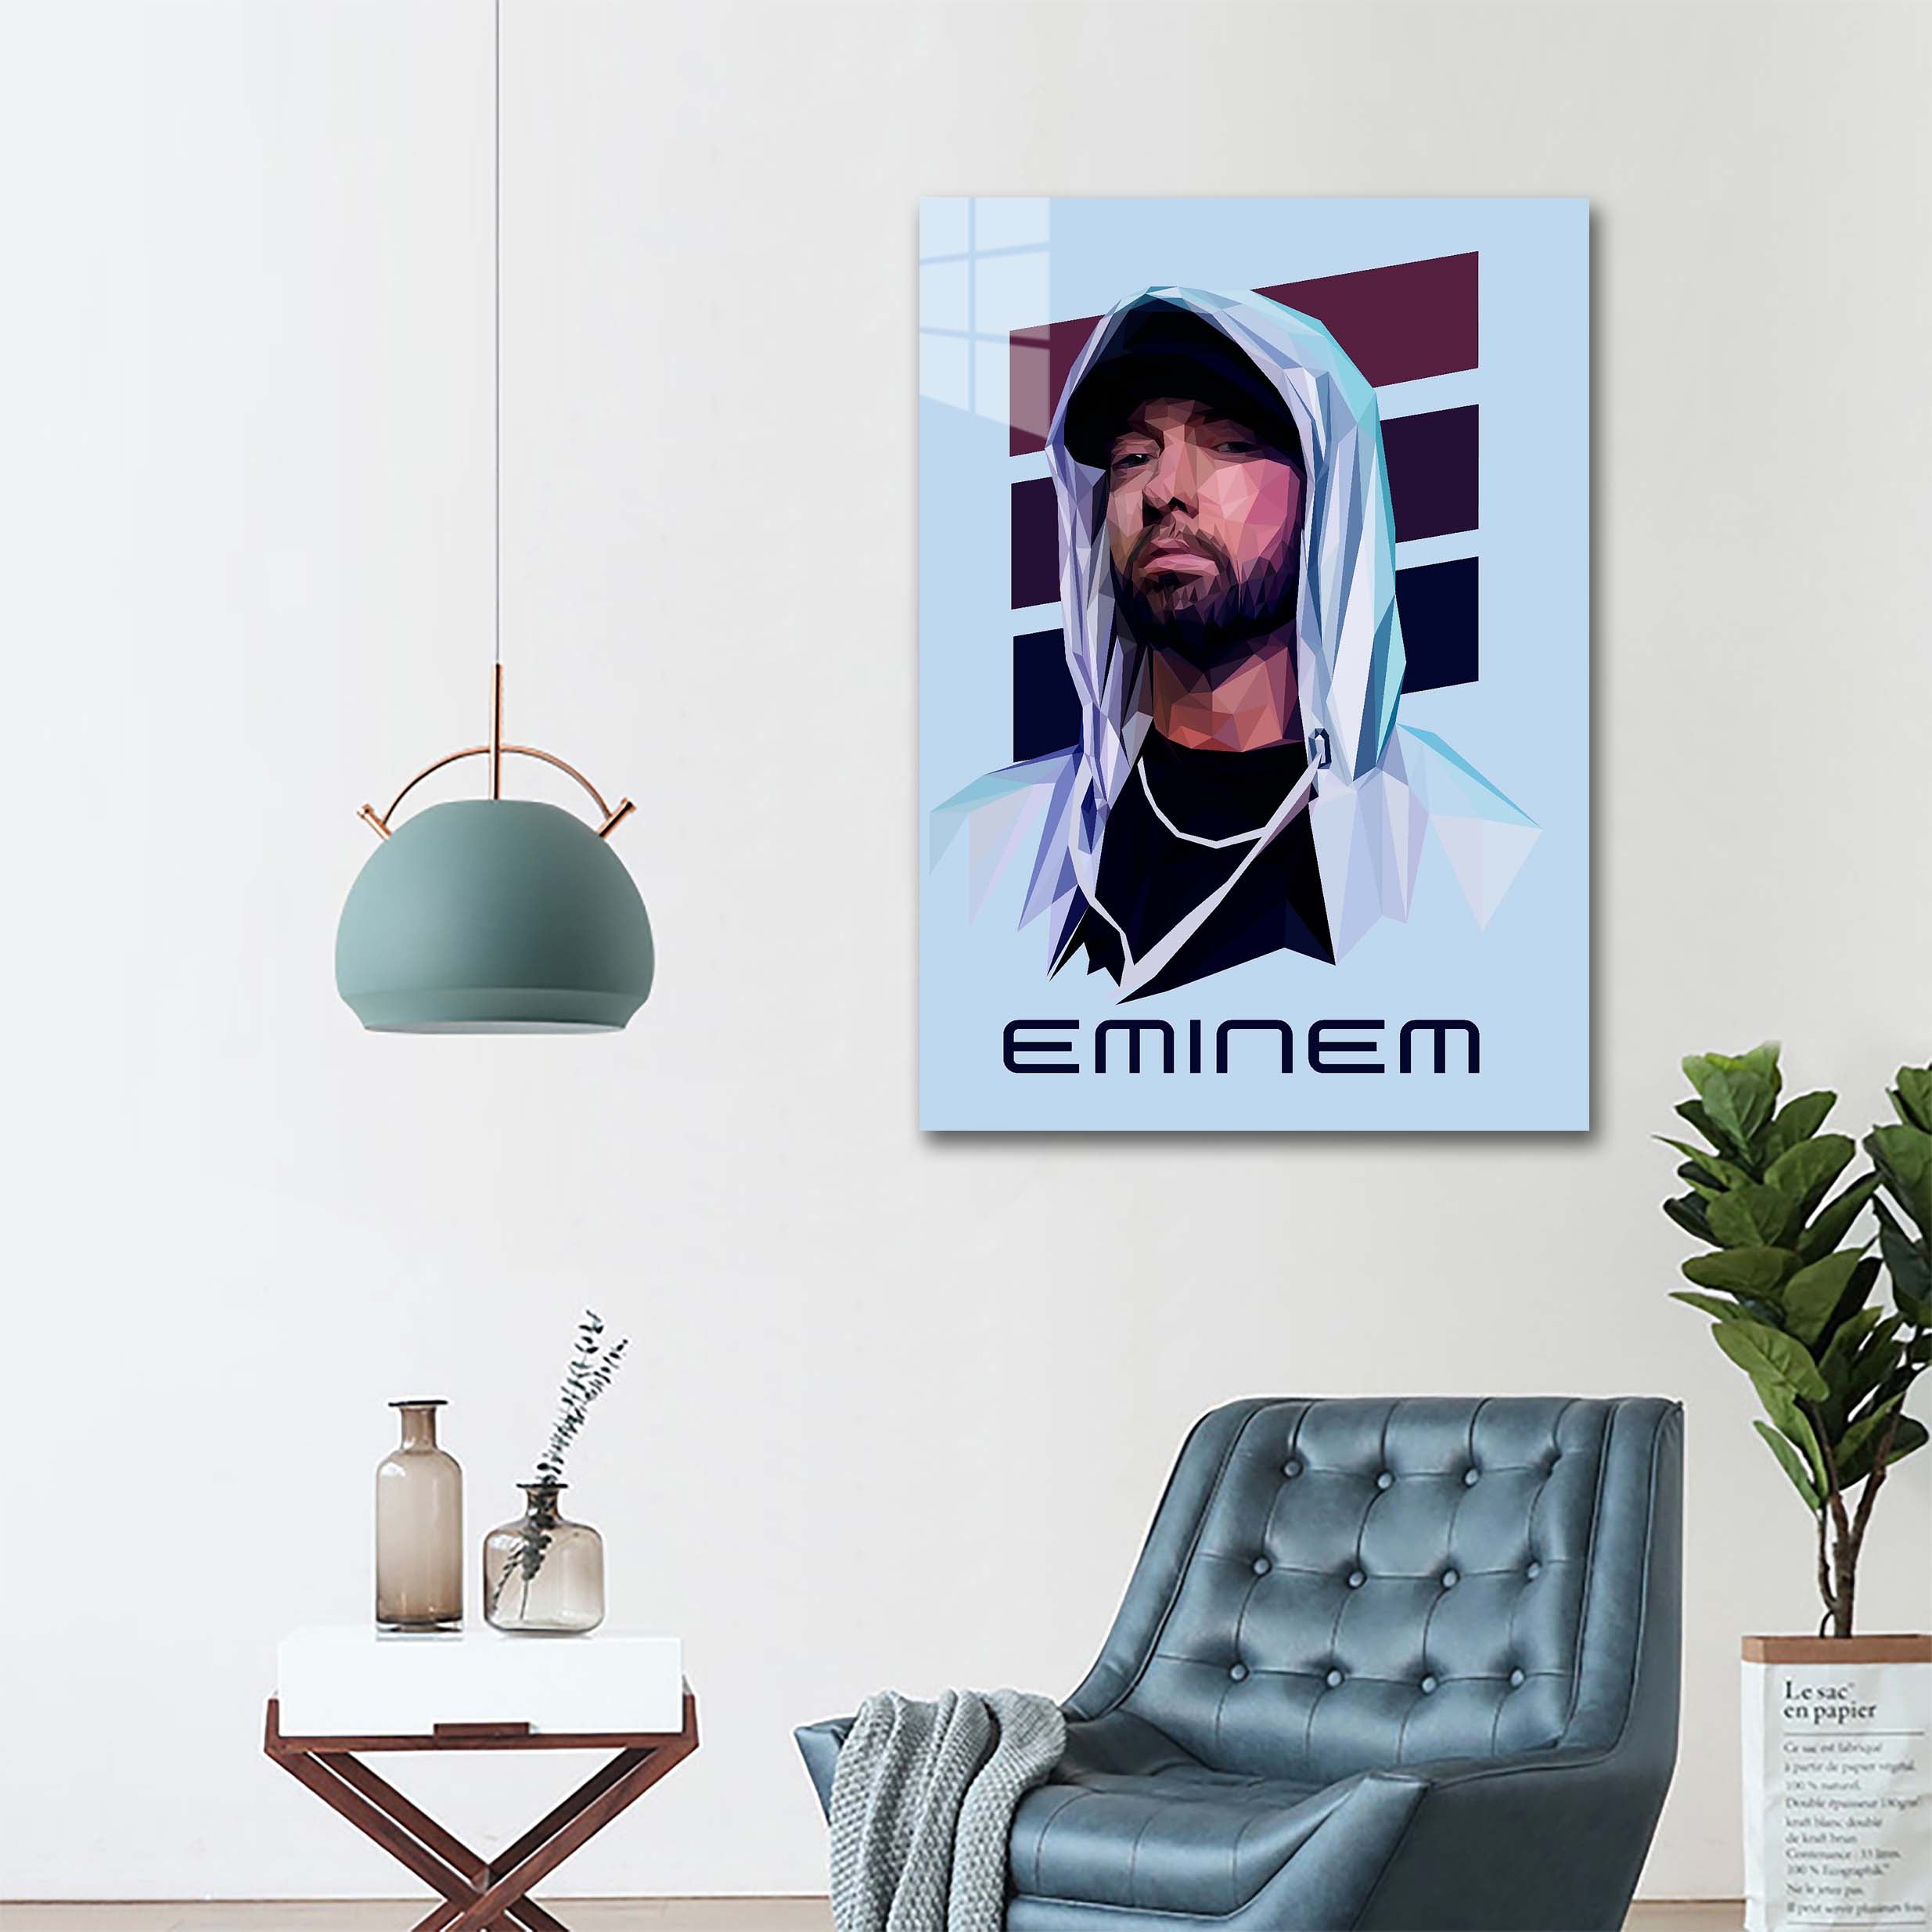 Eminem~2-designed by @Wpapmalang